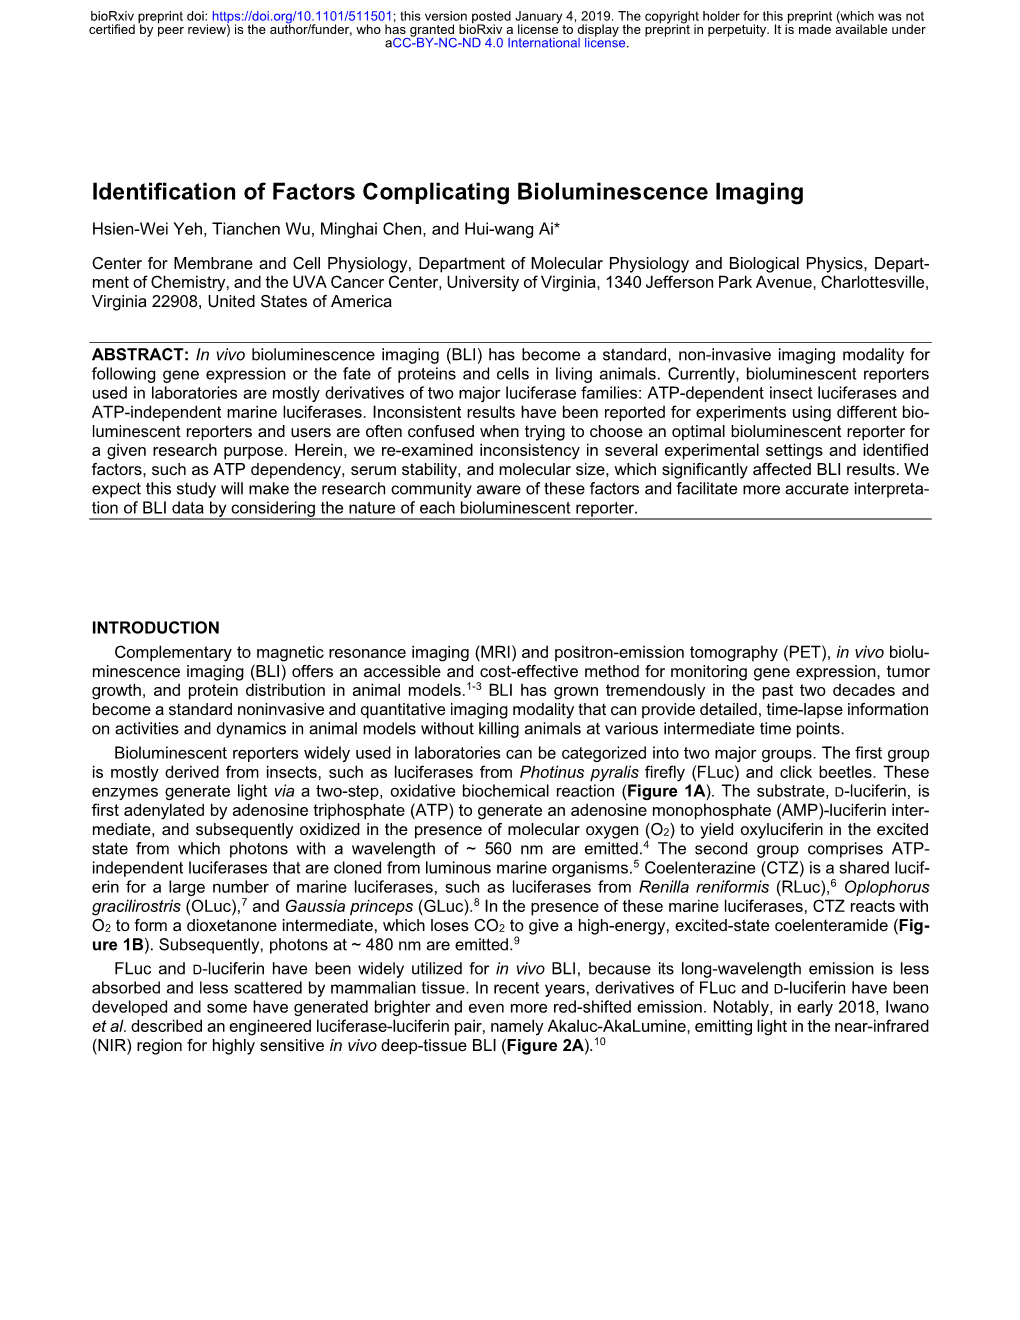 Identification of Factors Complicating Bioluminescence Imaging